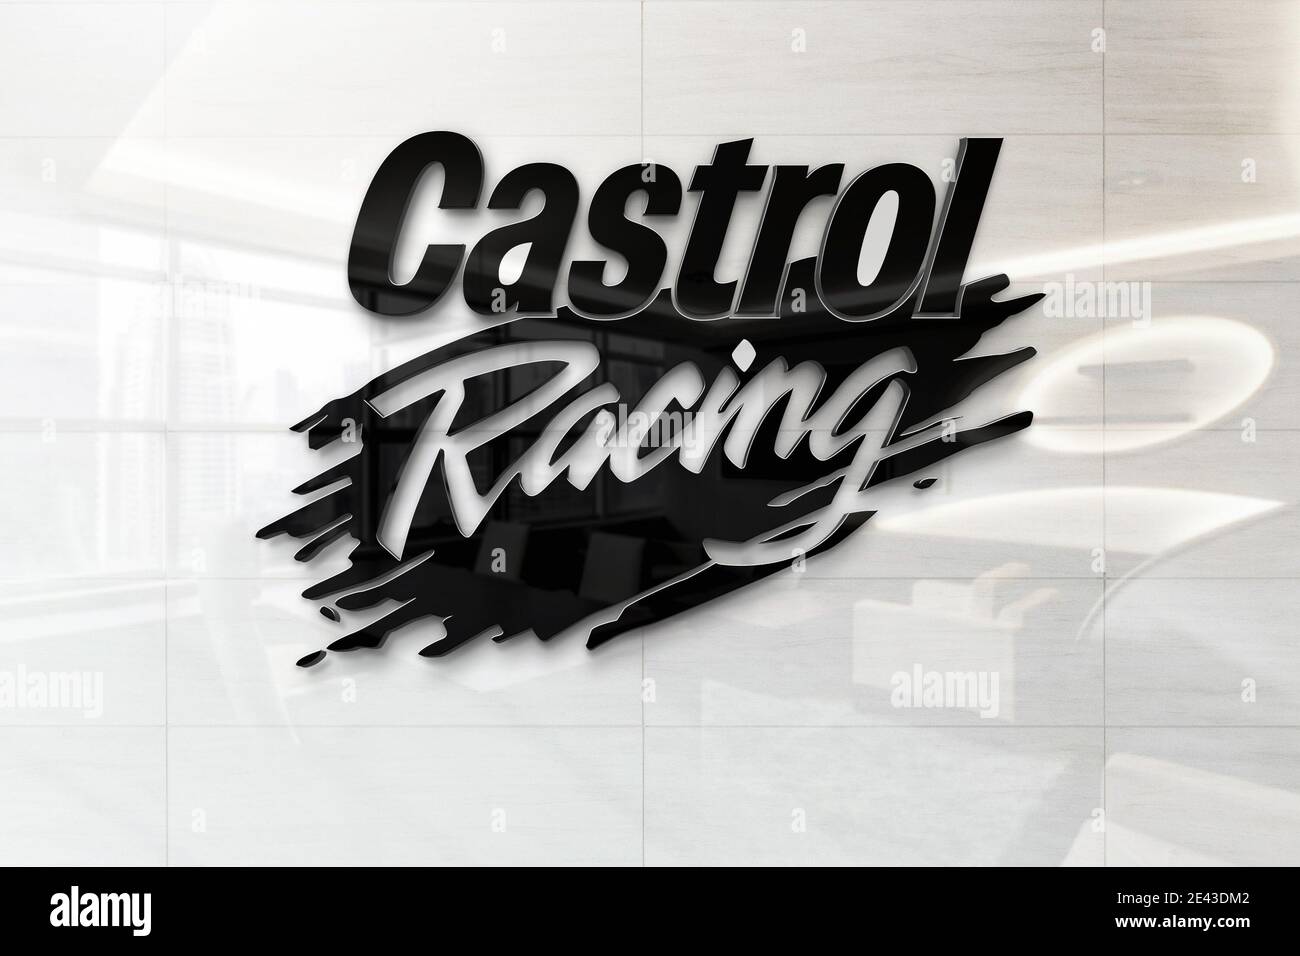 castrol racing office logo Stock Photo